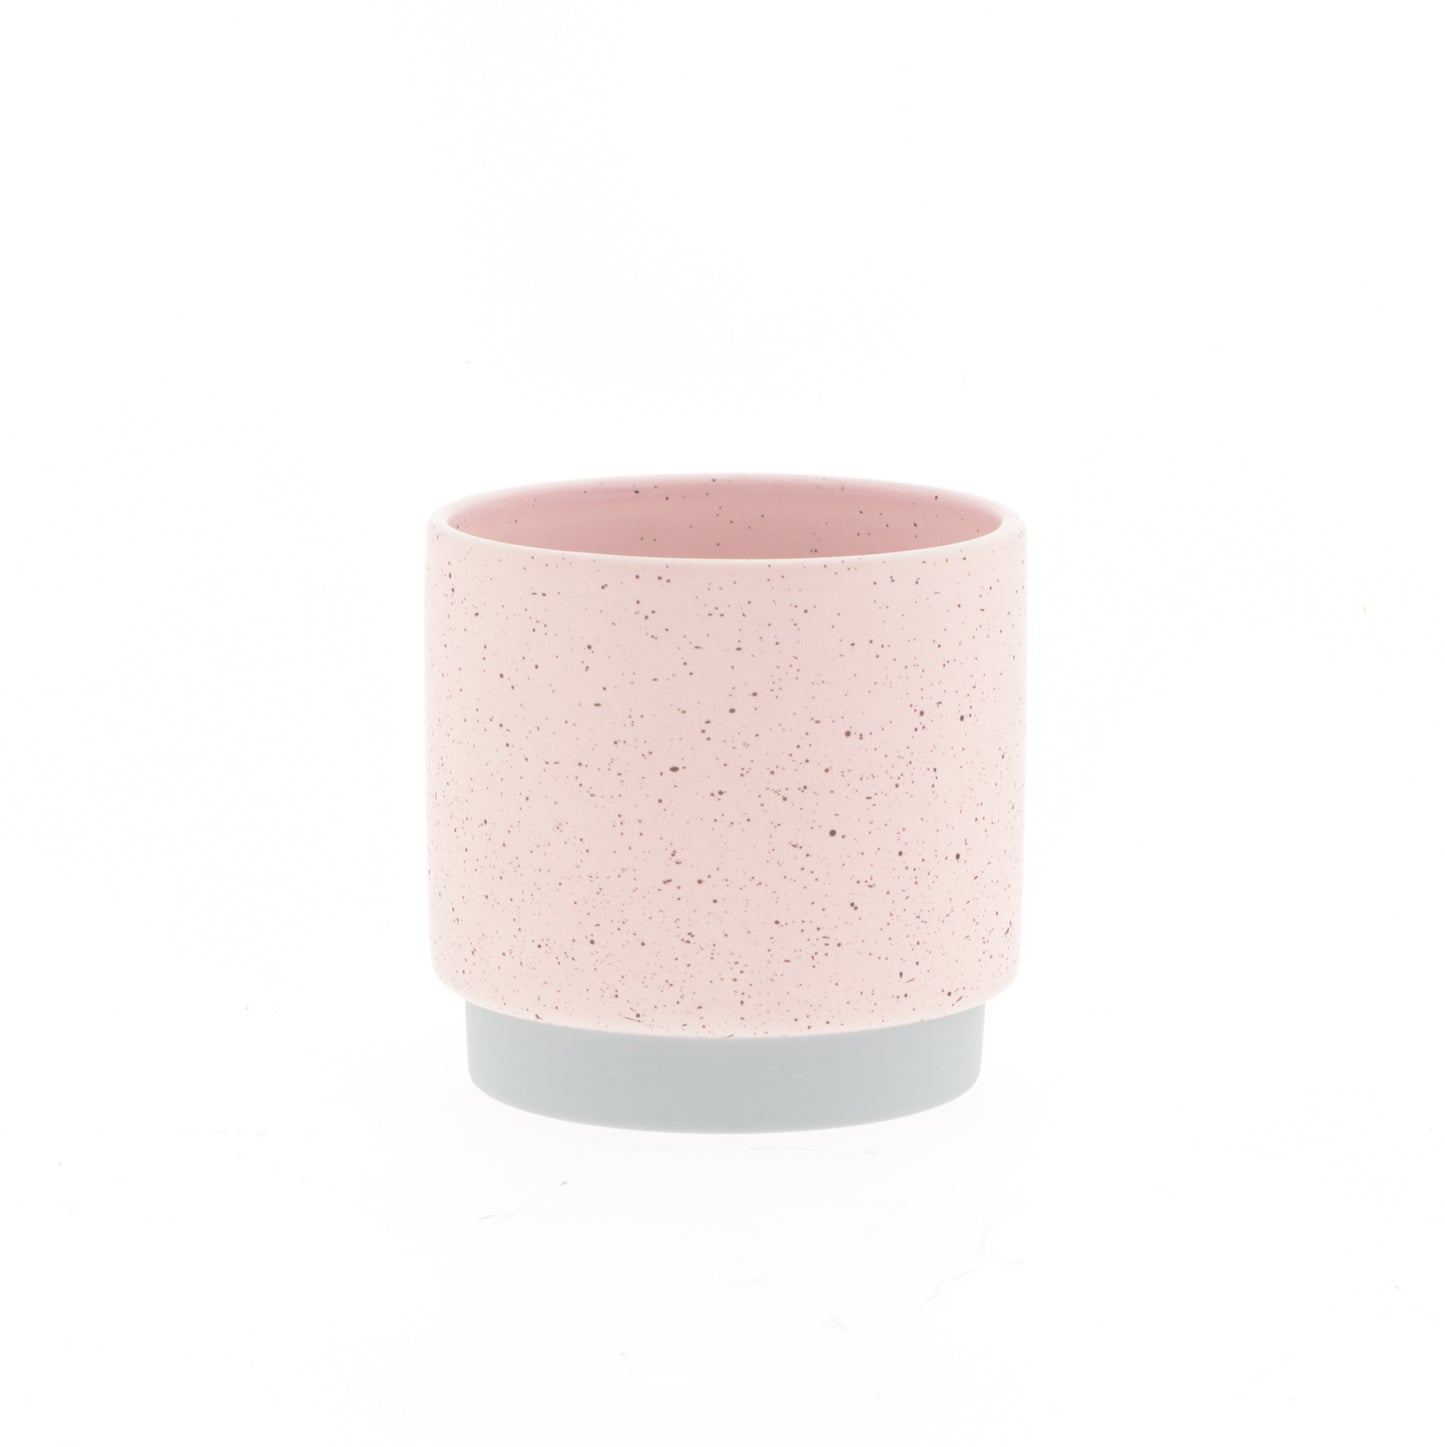 1x Ceramic Claudine Pot - Pink - Various Sizes